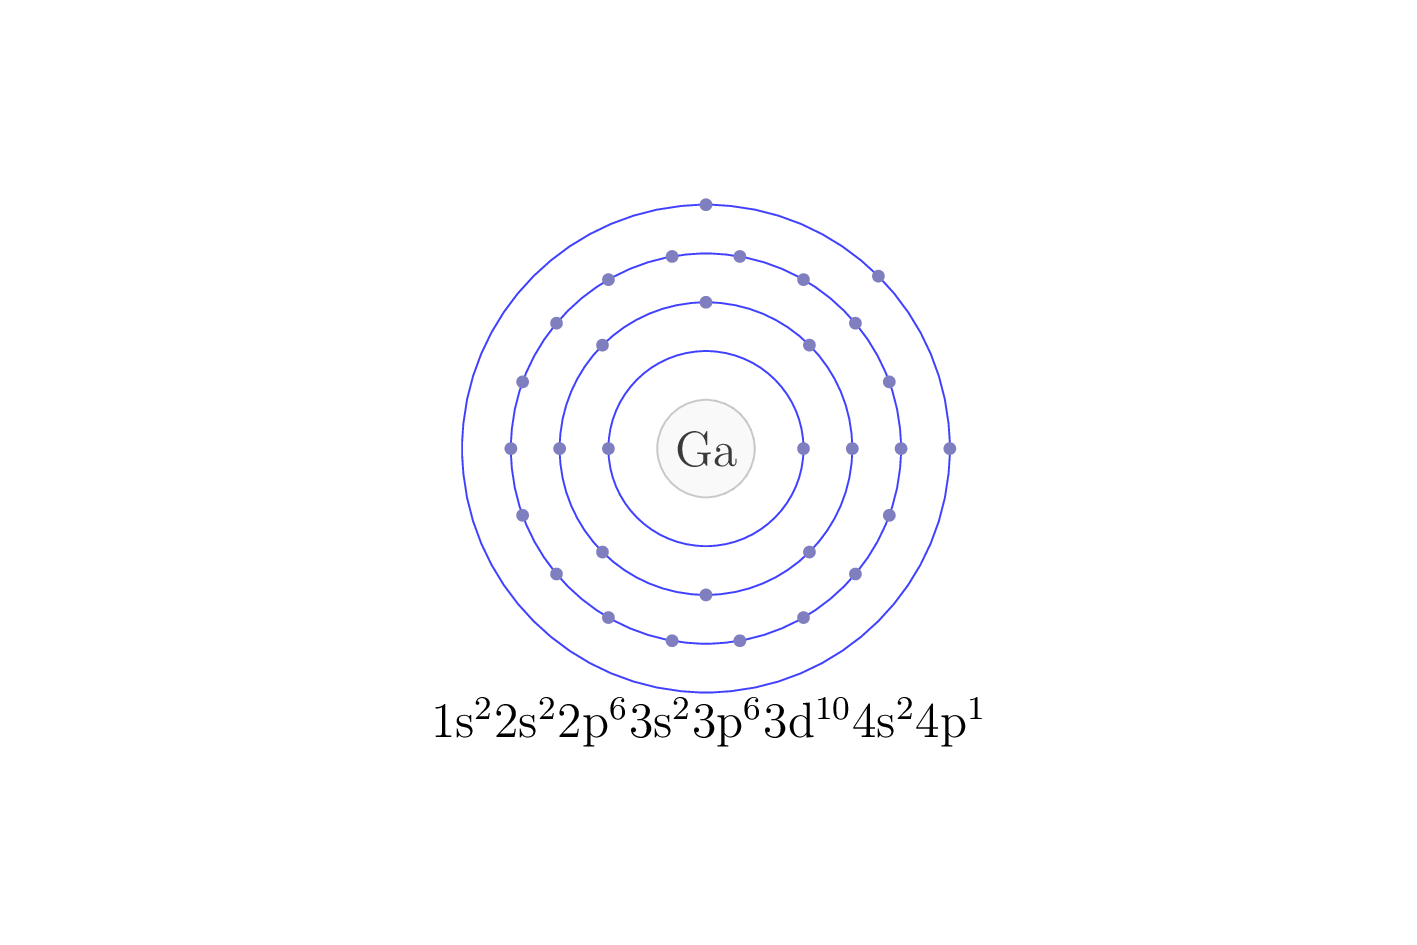 electron configuration of element Ga